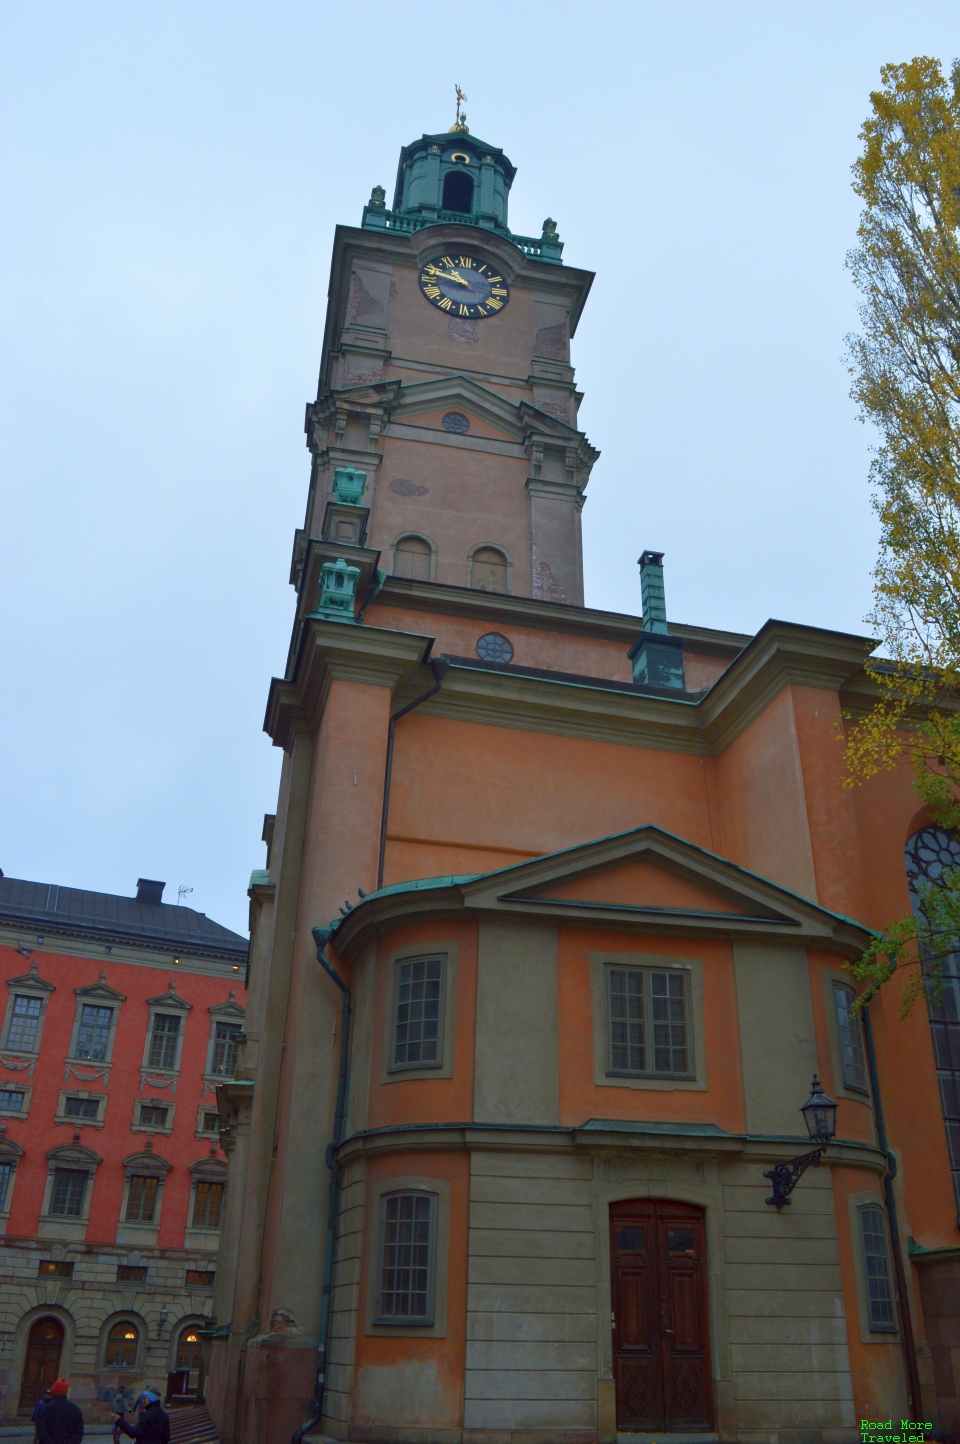 Storkyrkan bell tower